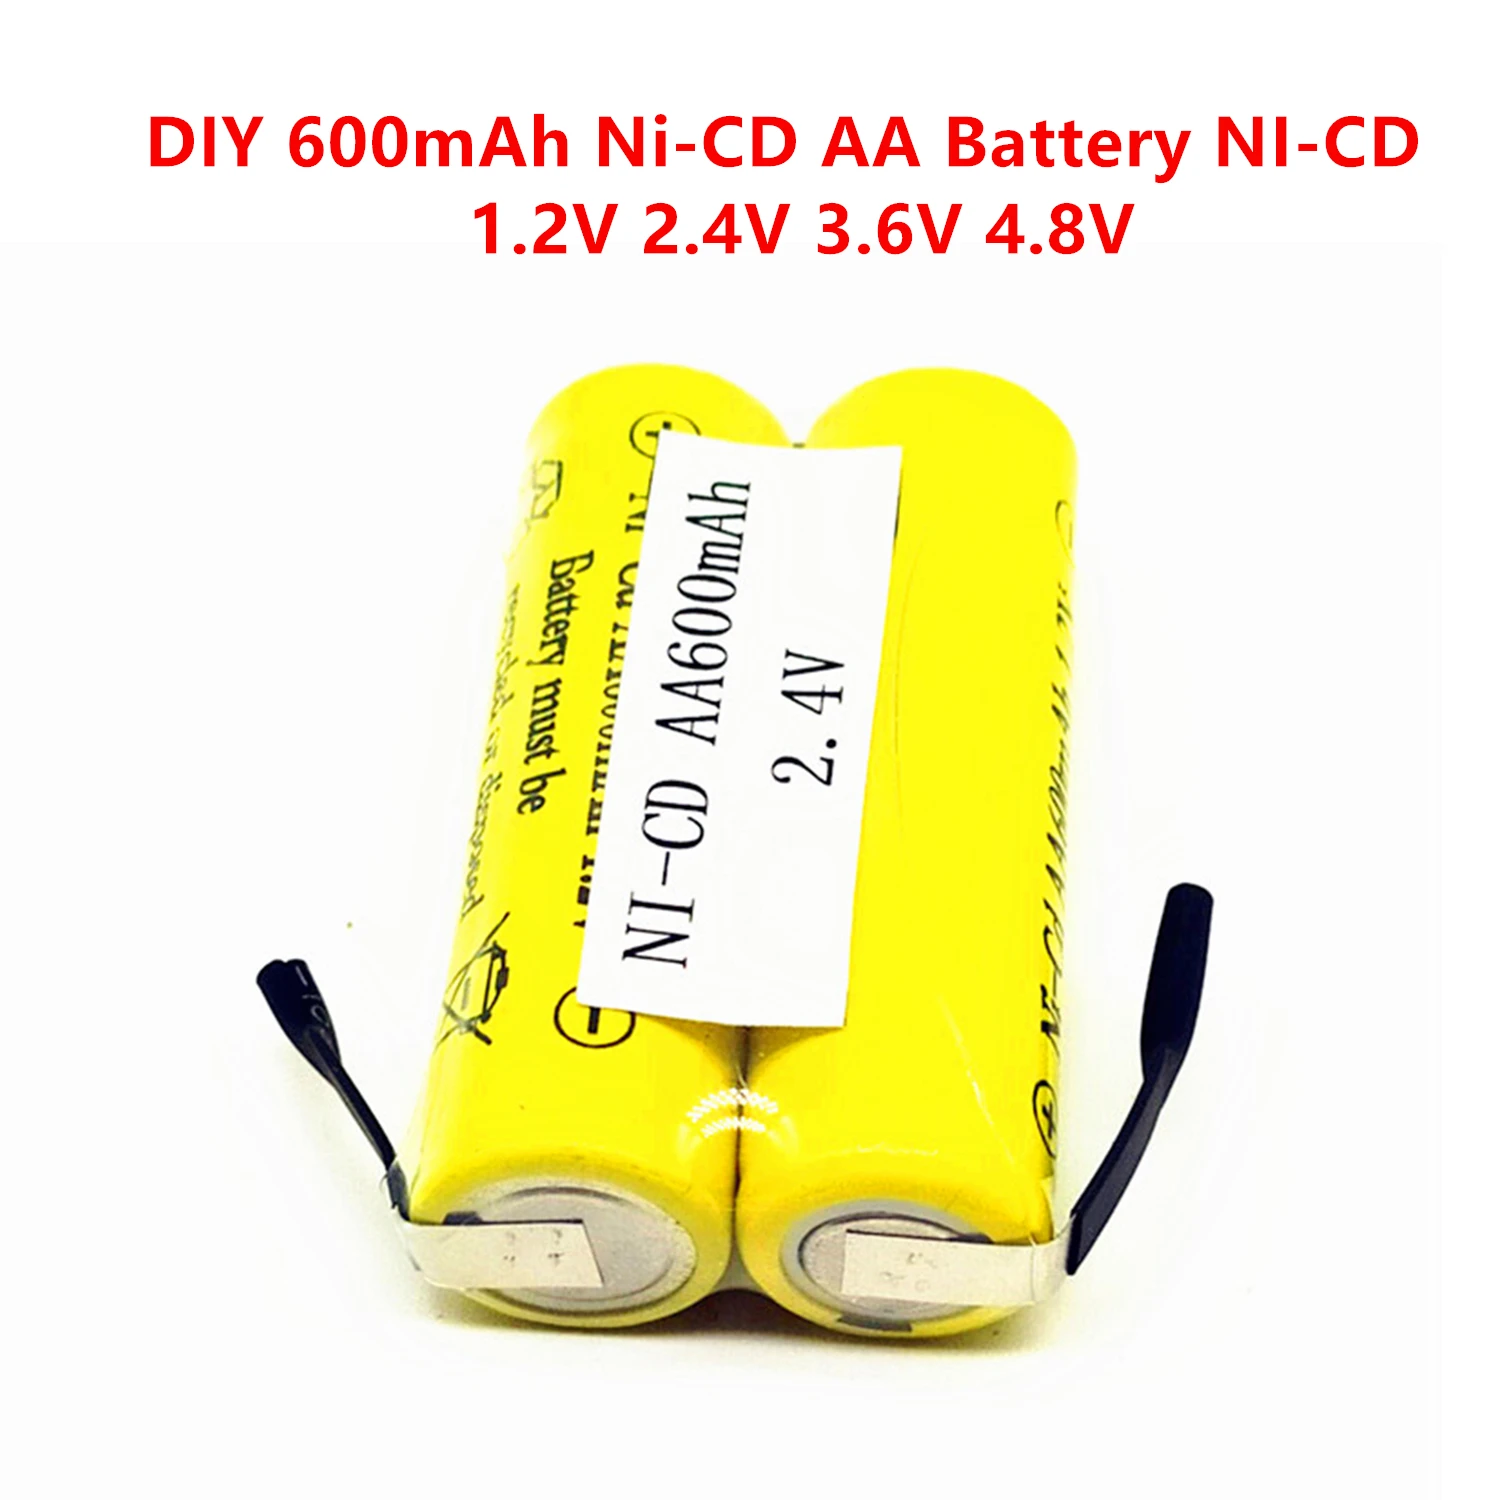 

DIY Ni-CD AA 600Mah 1.2V 2.4V 3.6V 4.8V Rechargeable Battery